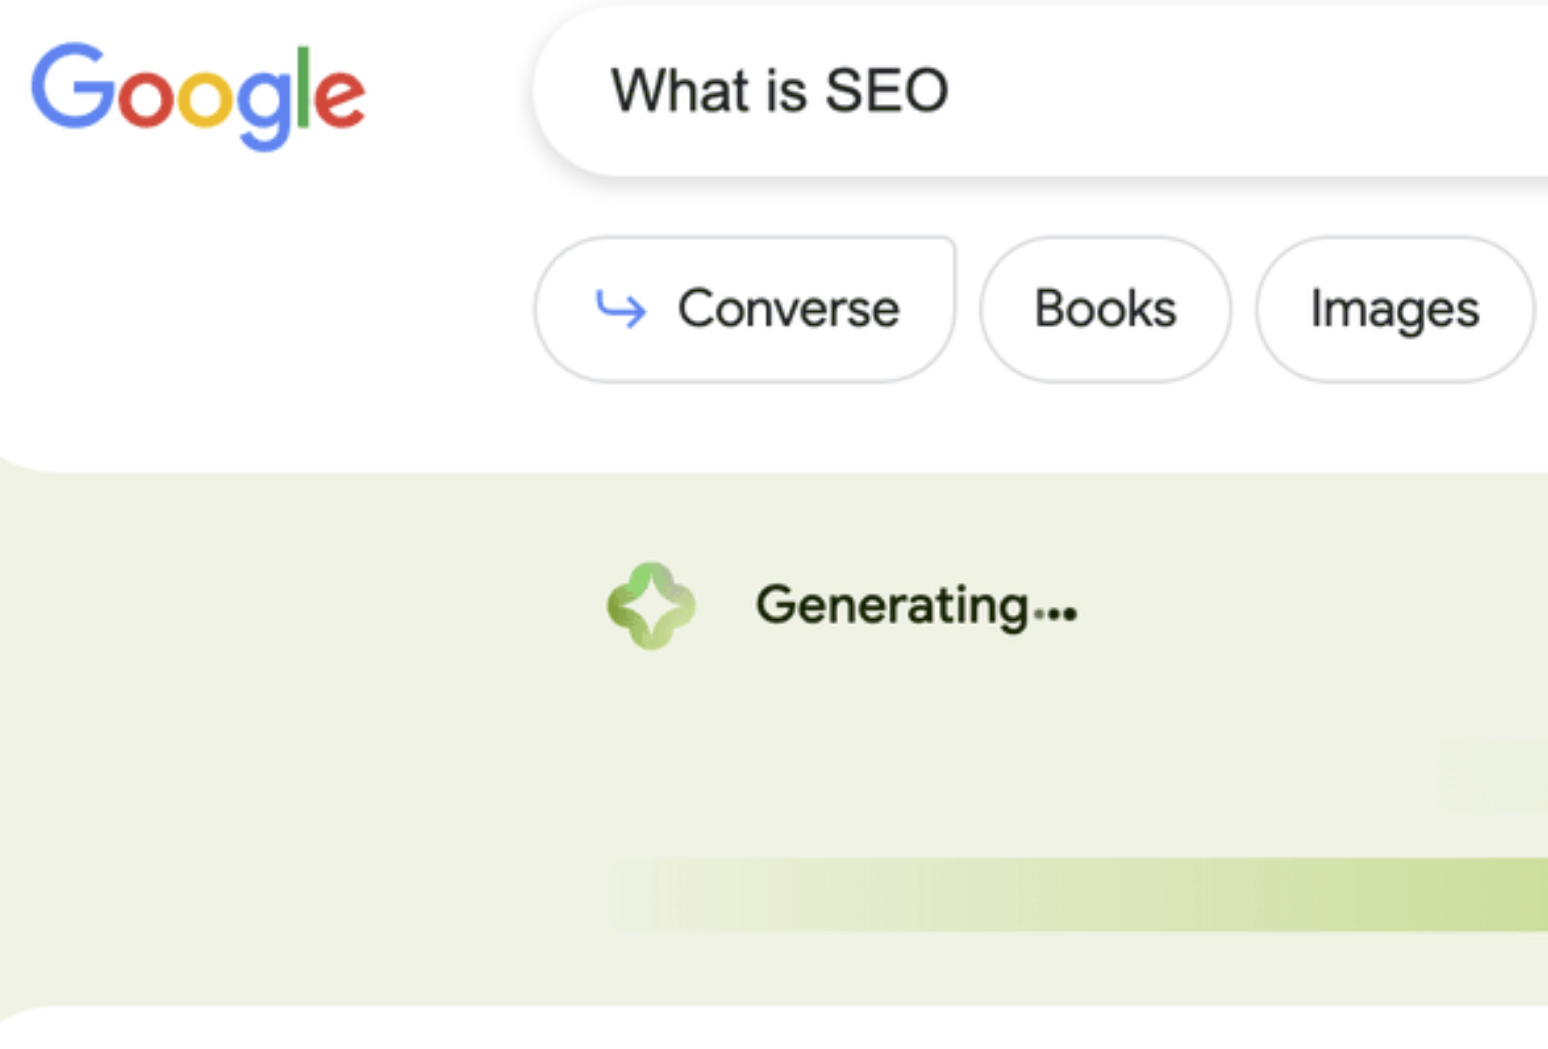 Google SGE: Generating...